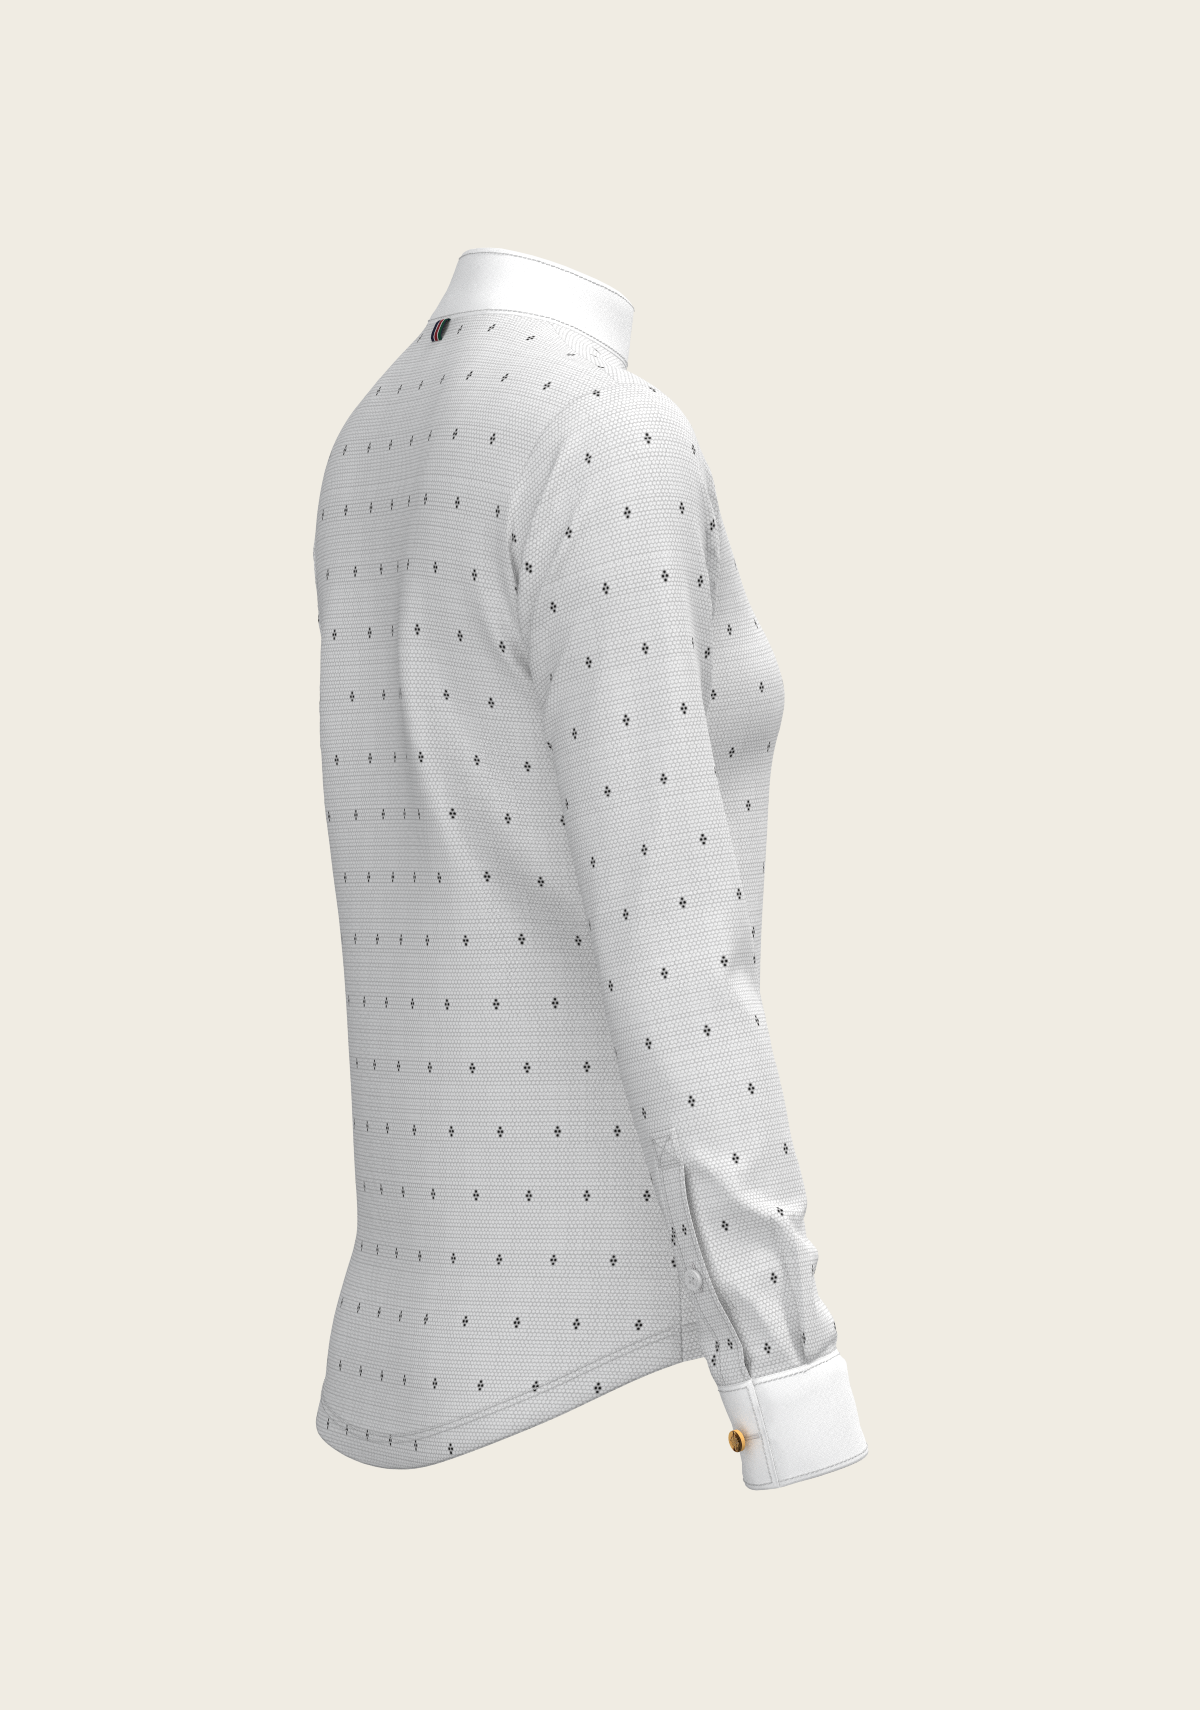 Mosaic 4 Dot Quarter Zip Long Sleeve Show Shirt